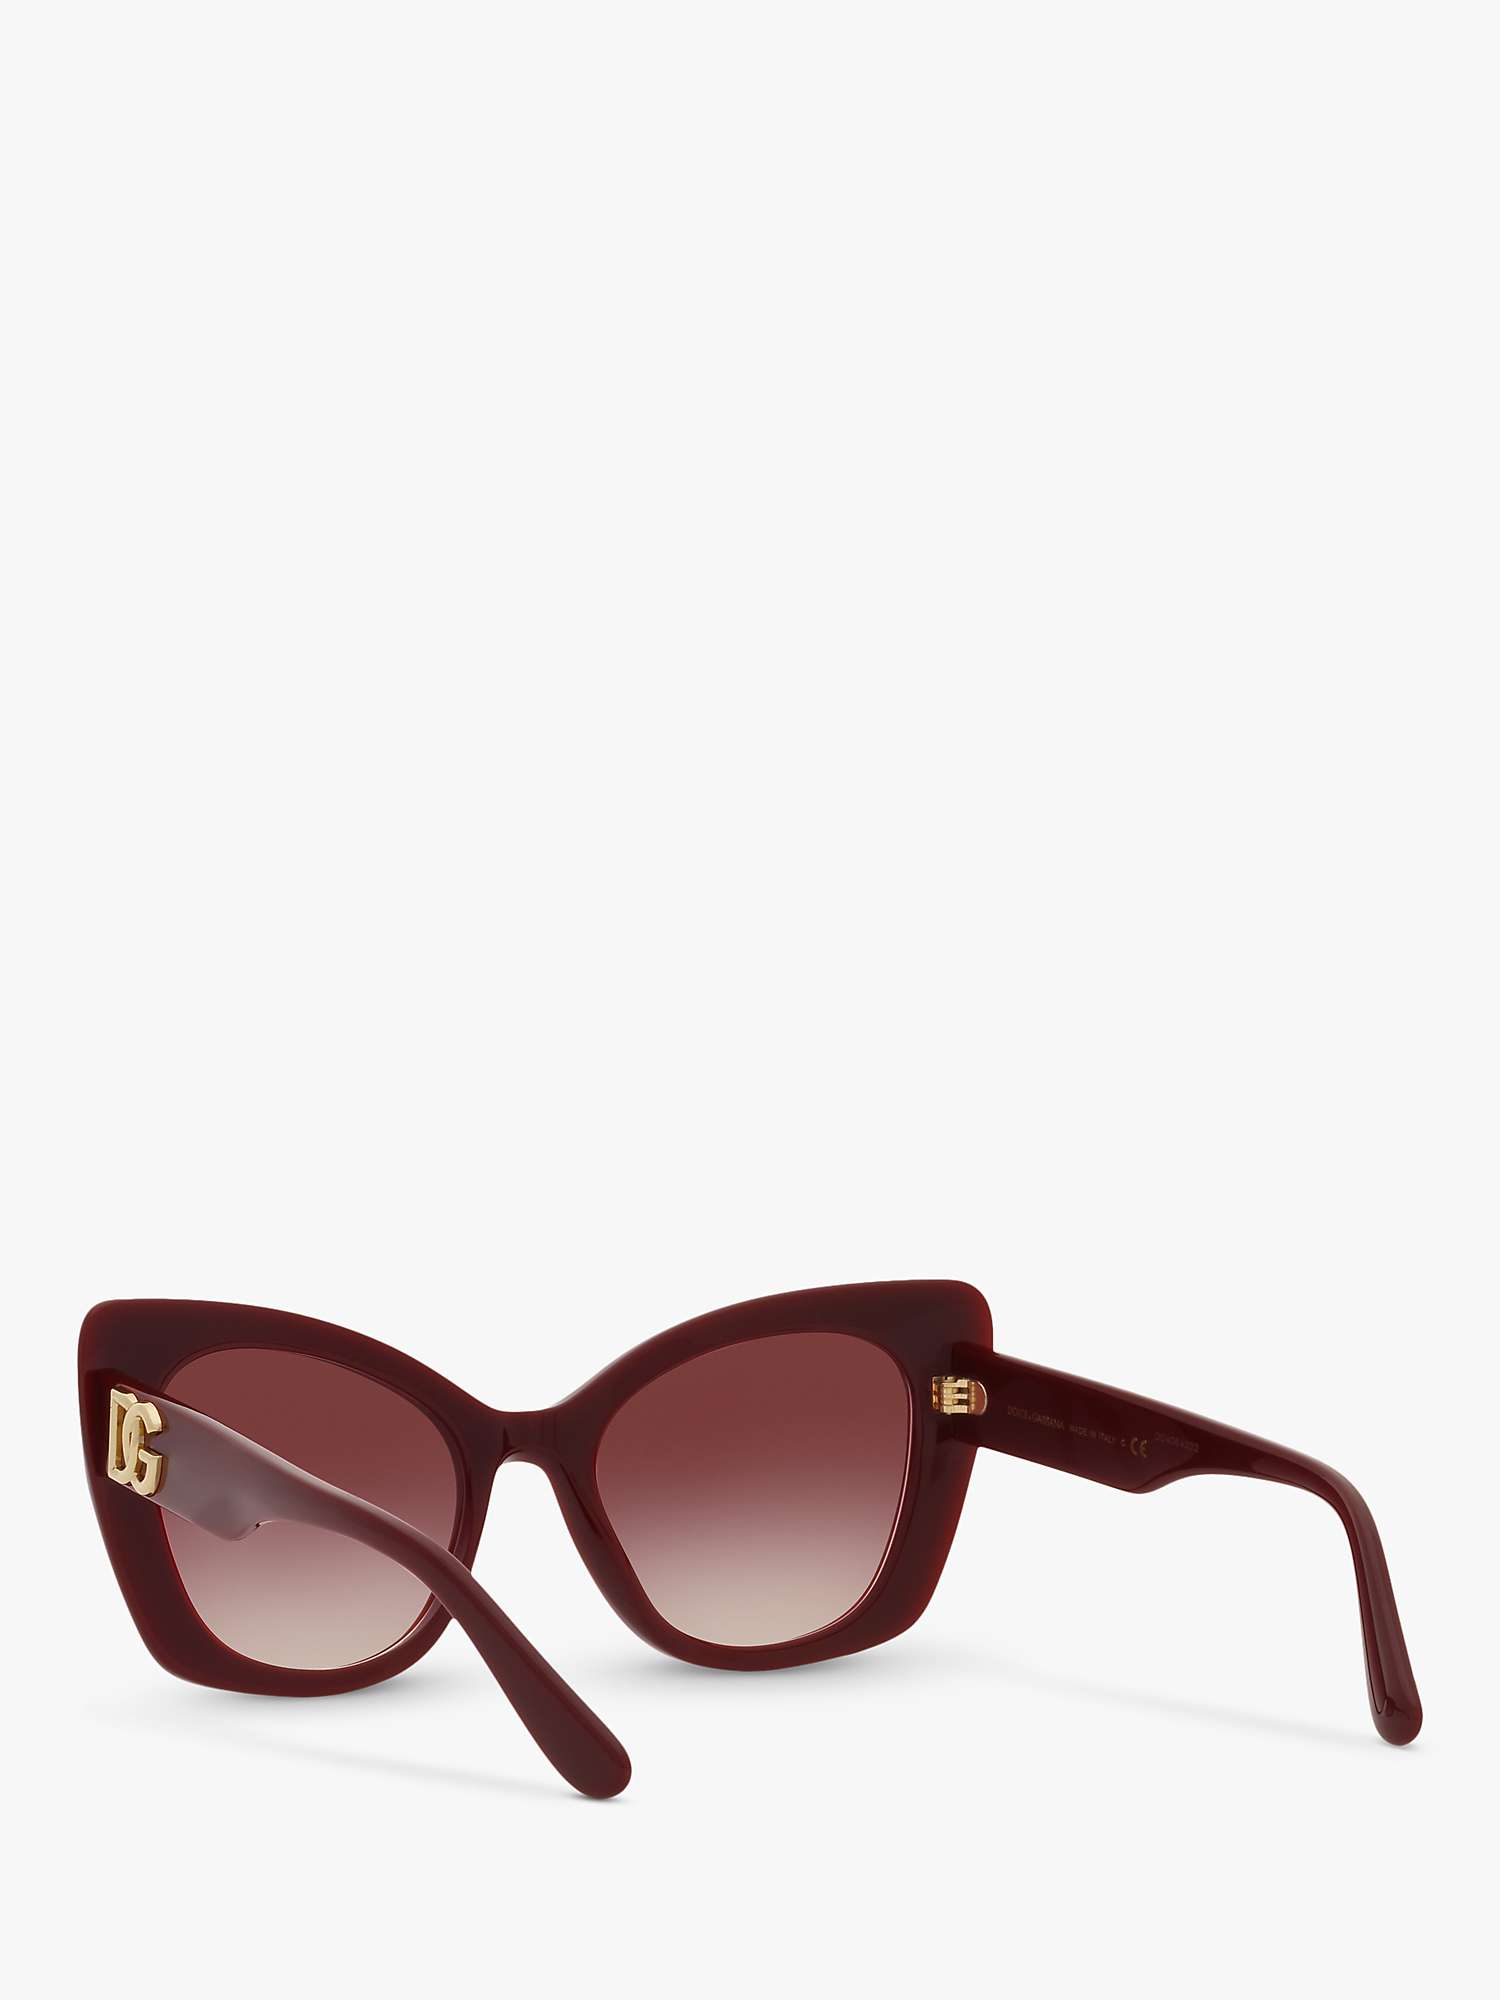 Buy Dolce & Gabbana DG4405 Women's Butterfly Sunglasses, Bordeaux/Red Gradient Online at johnlewis.com